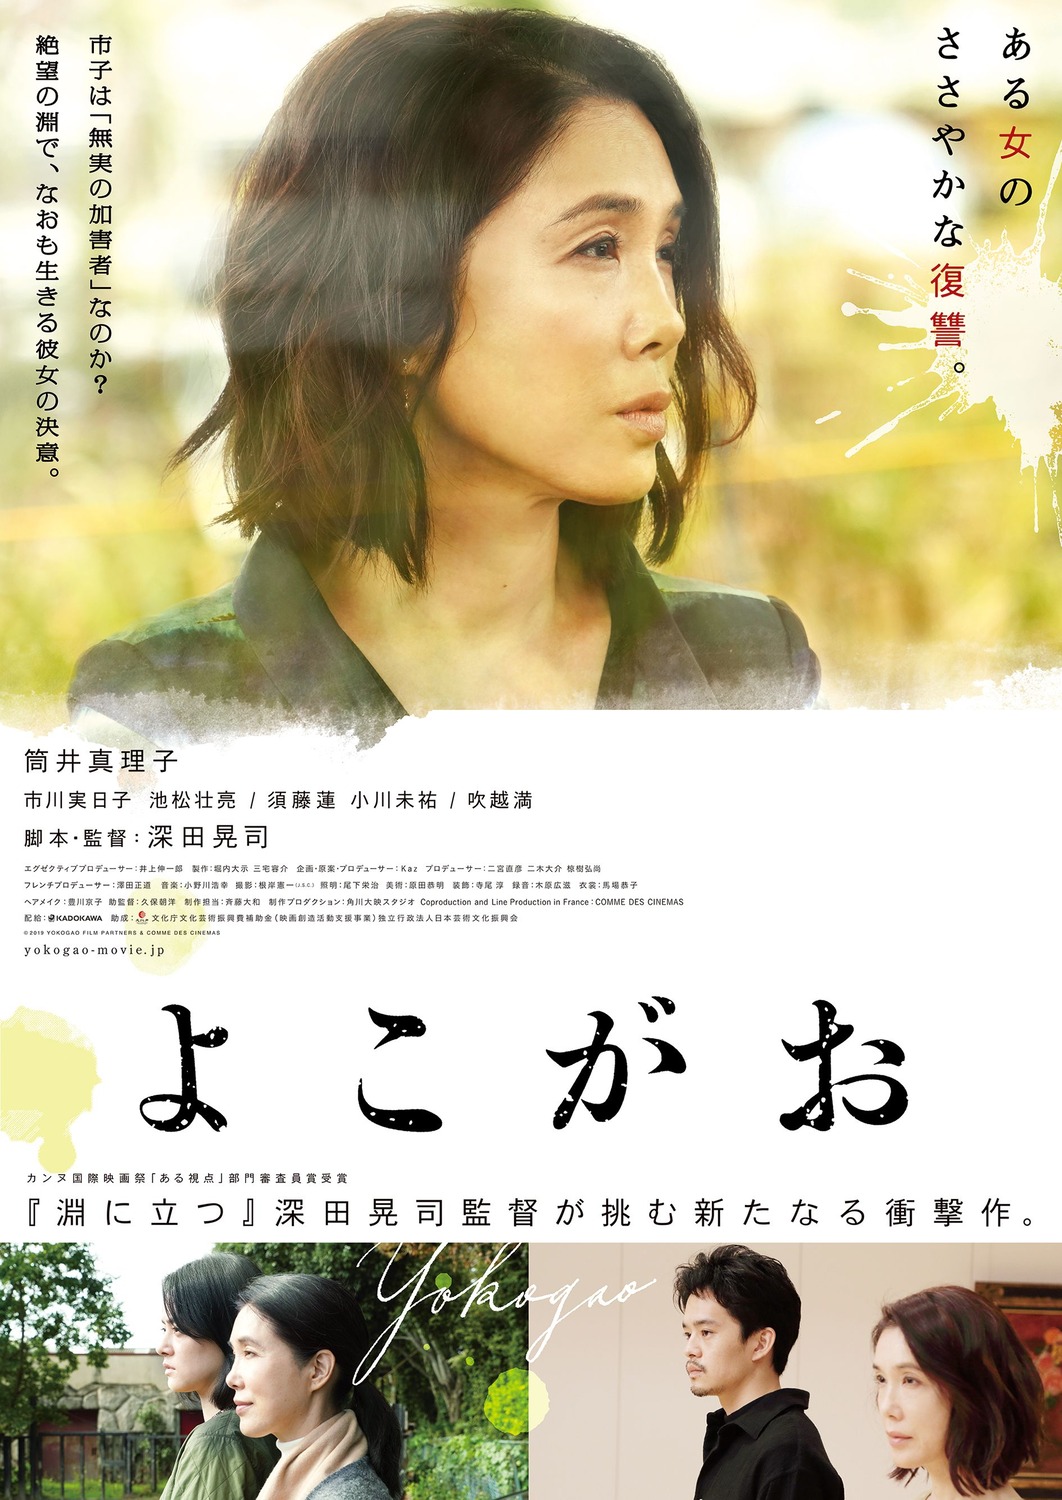 Extra Large Movie Poster Image for Yokogao (#1 of 3)